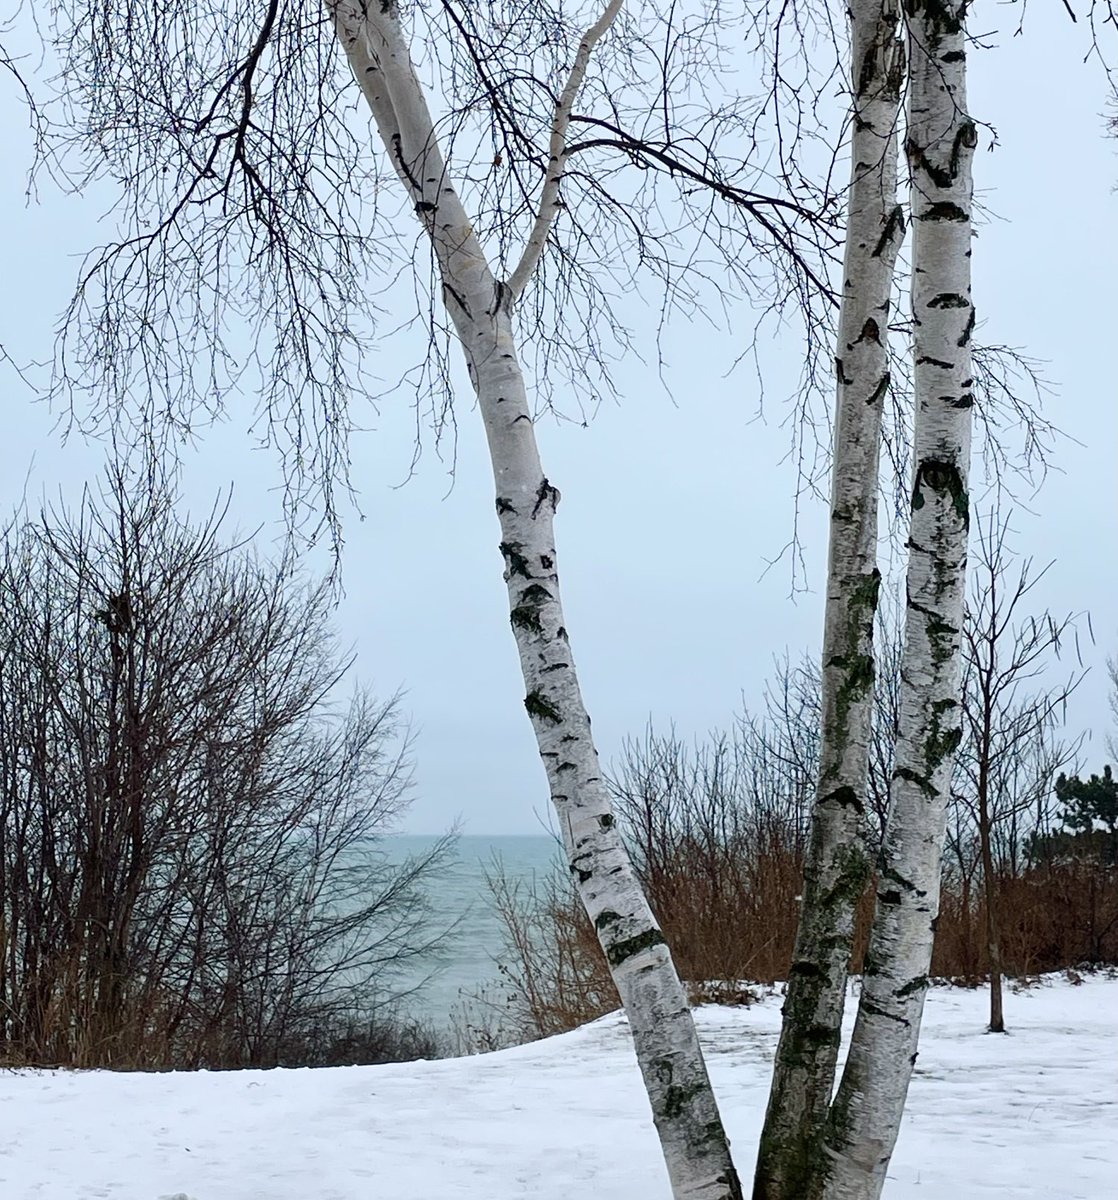 Sheboygans, in shades of blue and white. #nature #trees #birchtrees #whitebirch #water #shoreline #cliffside #sheboygan #winter #weather #drab #wisconsin #shadesofgrey ⁦@LindseySlaterTV⁩ ⁦@Mark_Baden⁩